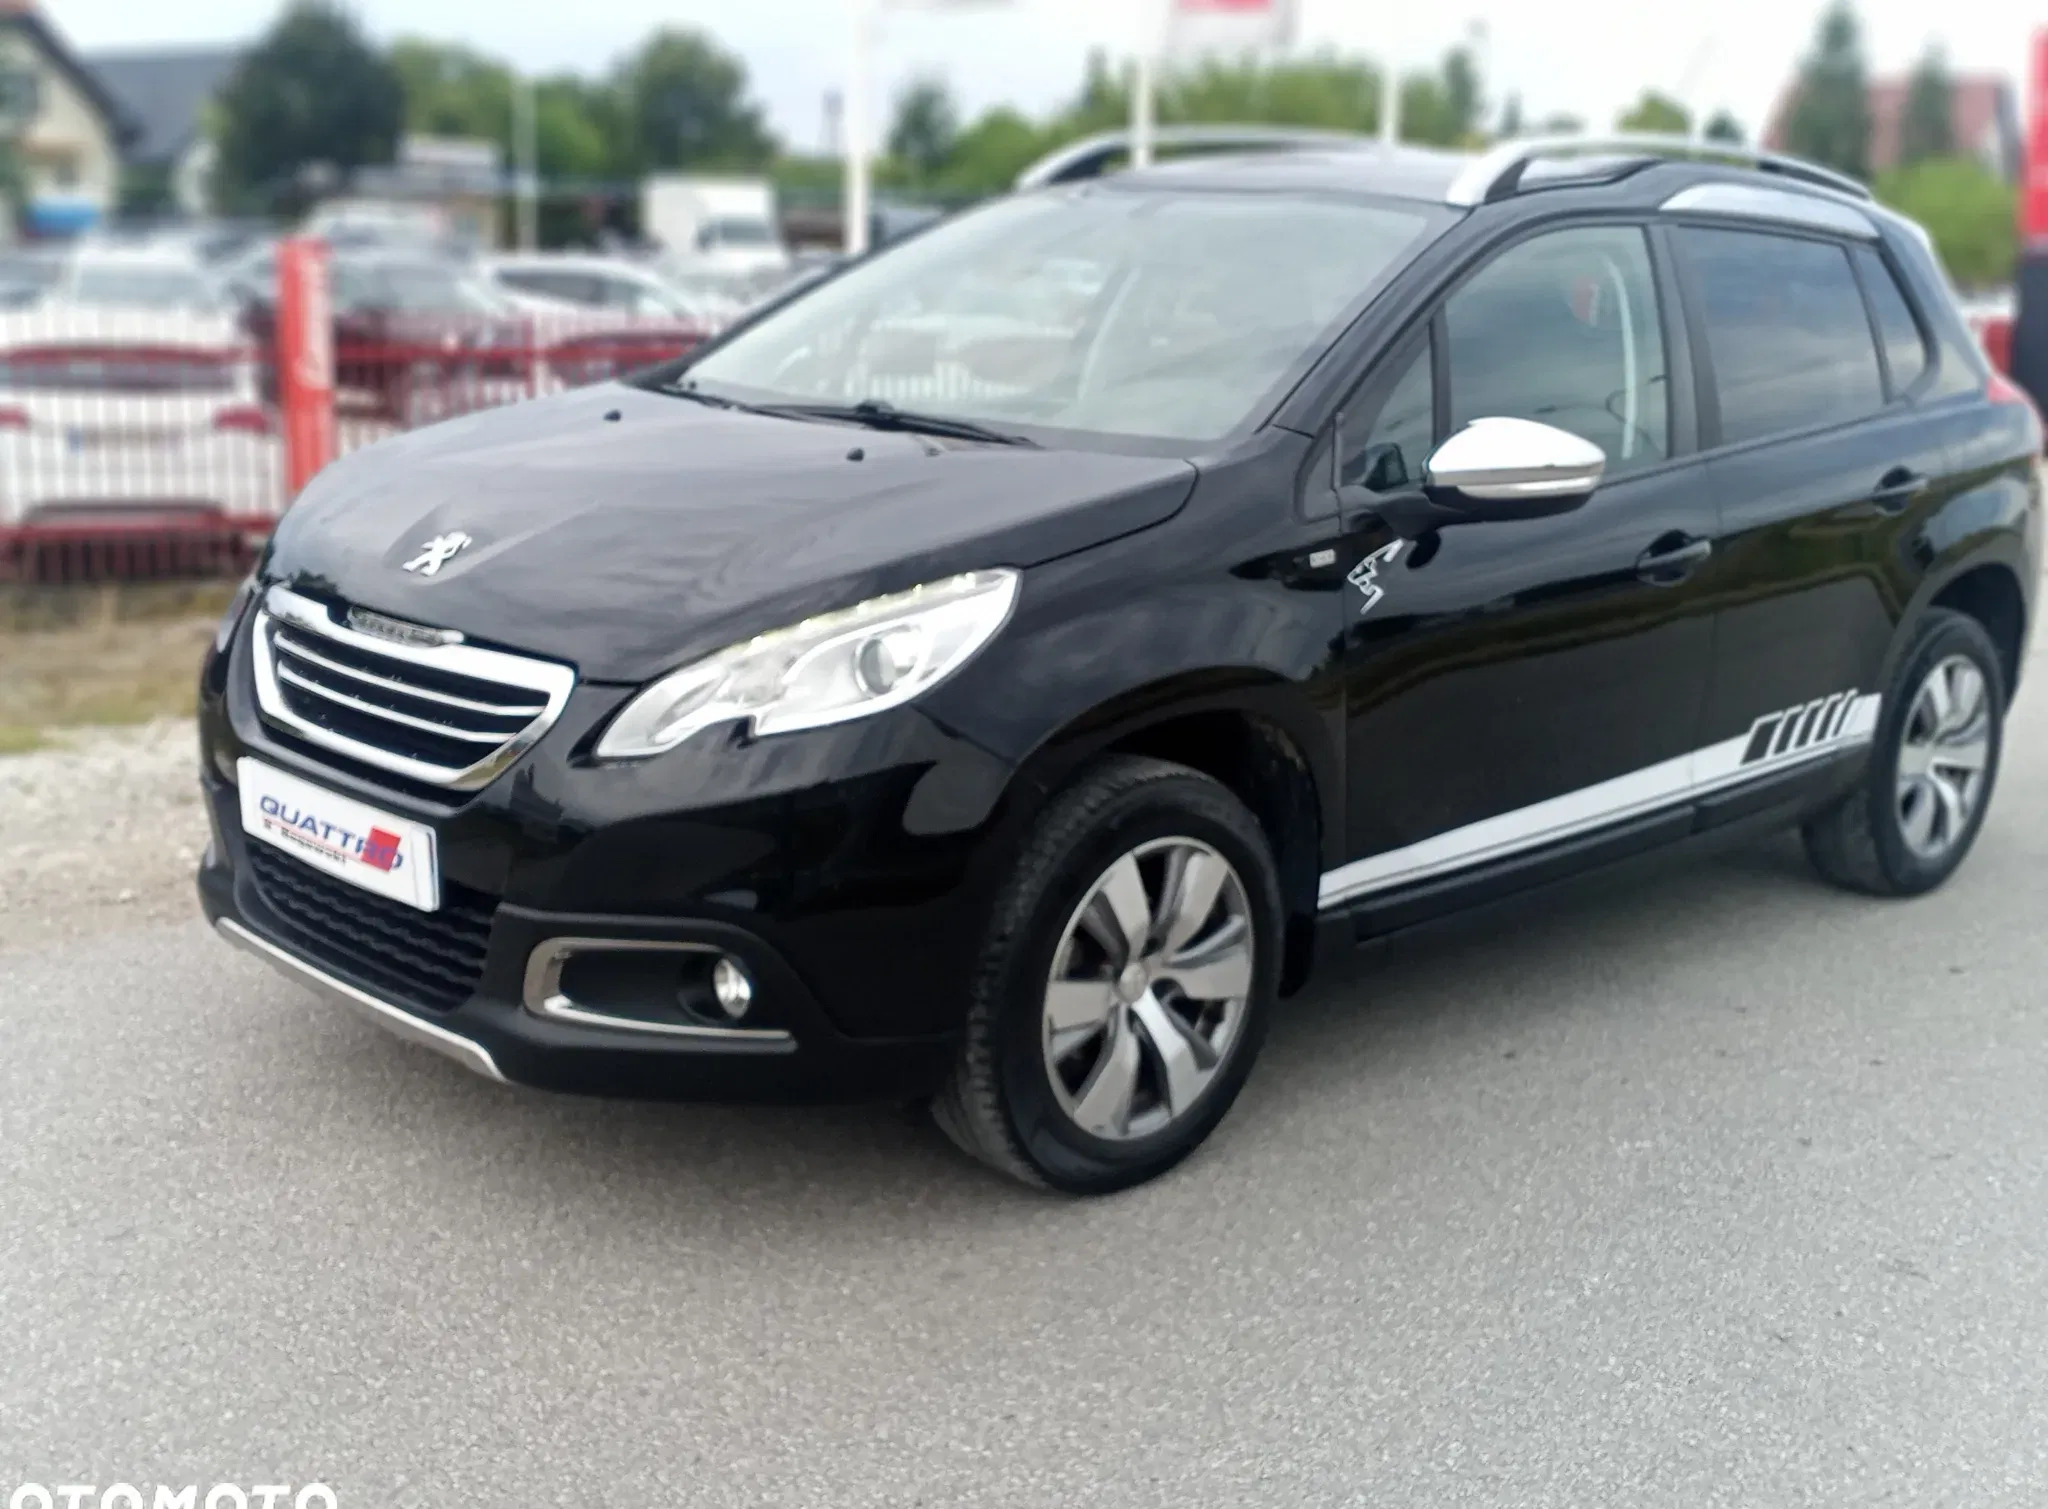 peugeot Peugeot 2008 cena 35900 przebieg: 152000, rok produkcji 2015 z Kielce